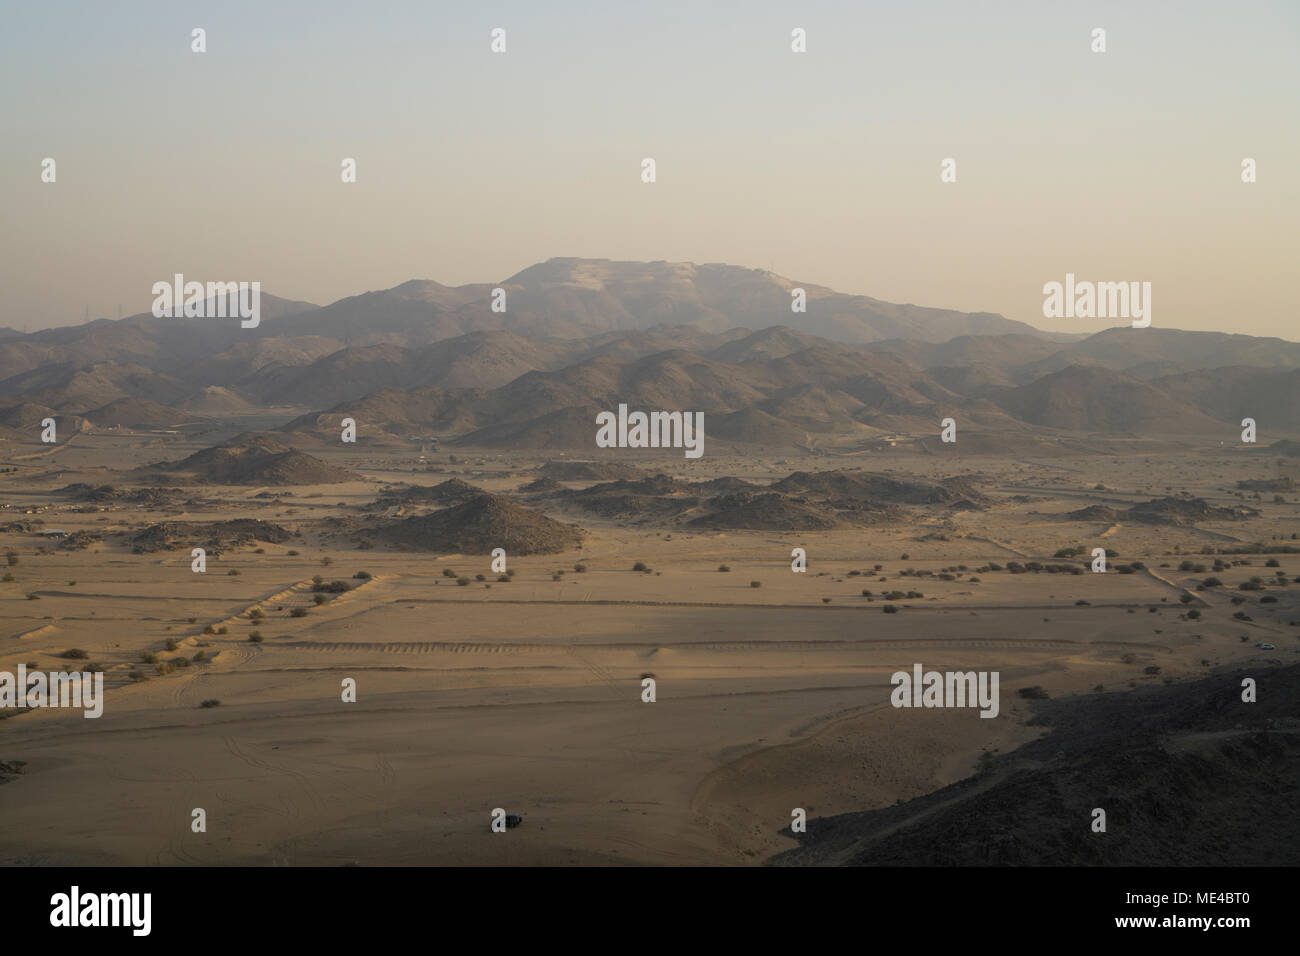 Deserto di scena Asfan in Arabia Saudita Foto Stock